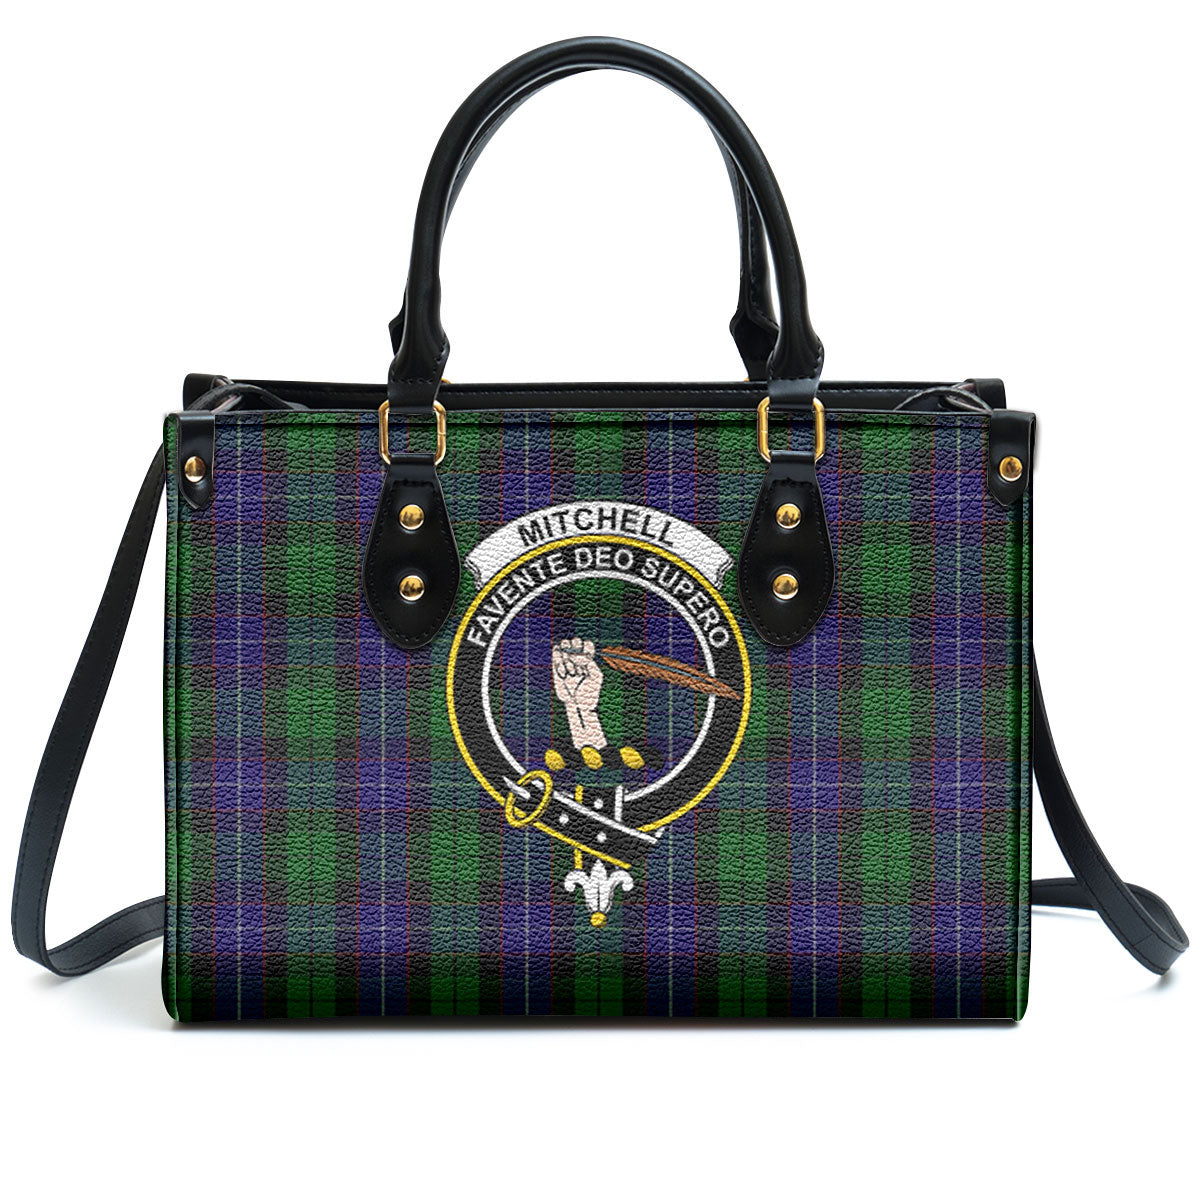 Mitchell Tartan Crest Leather Handbag